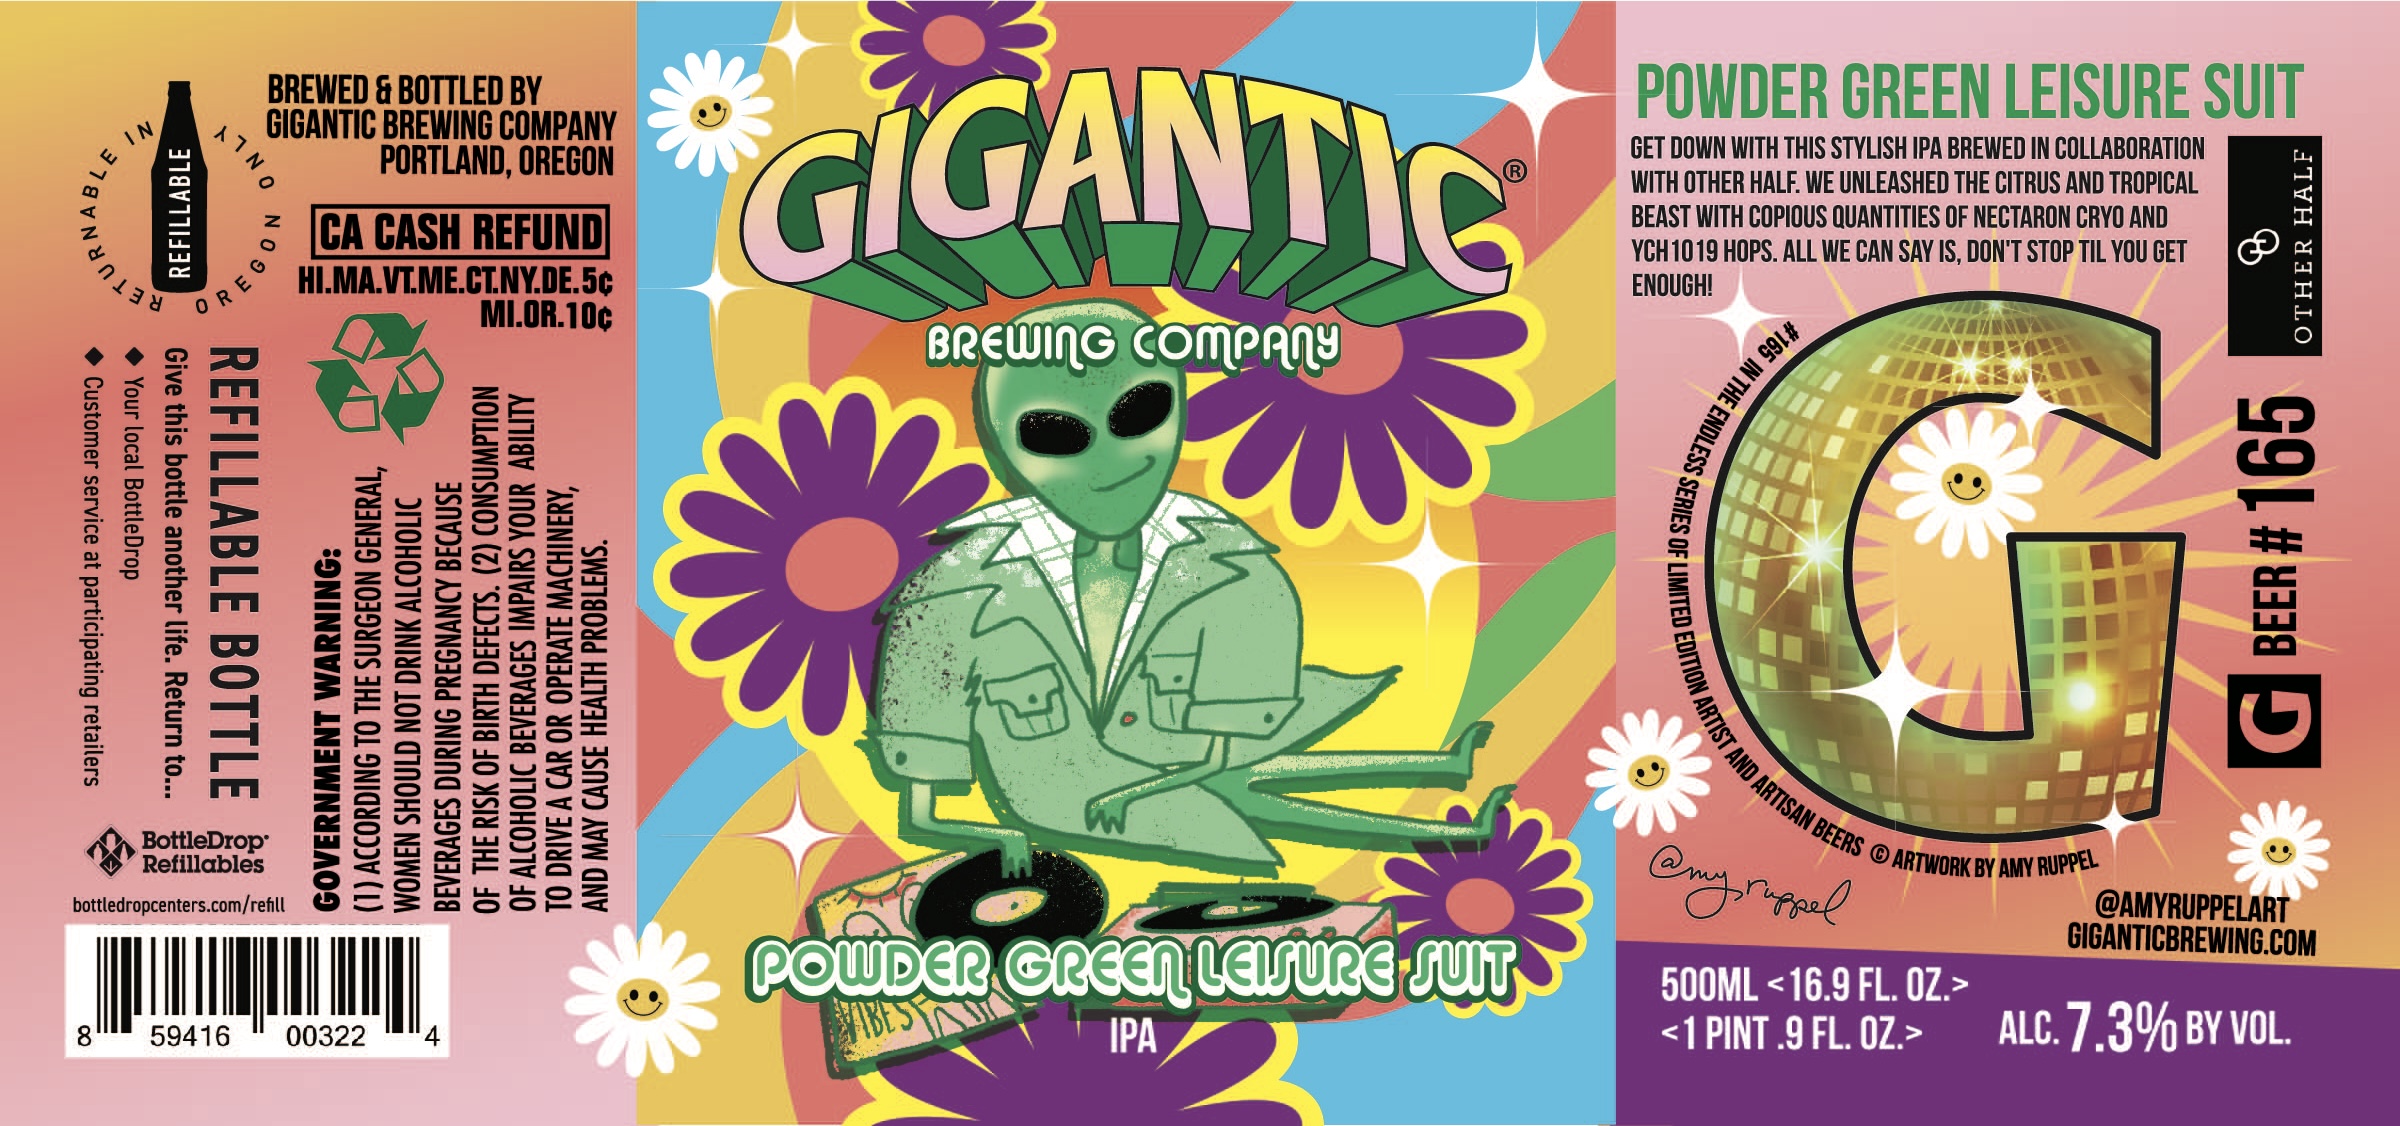 Gigantic & Other Half Release Powder Green Leisure Suit – BREWPUBLIC.com